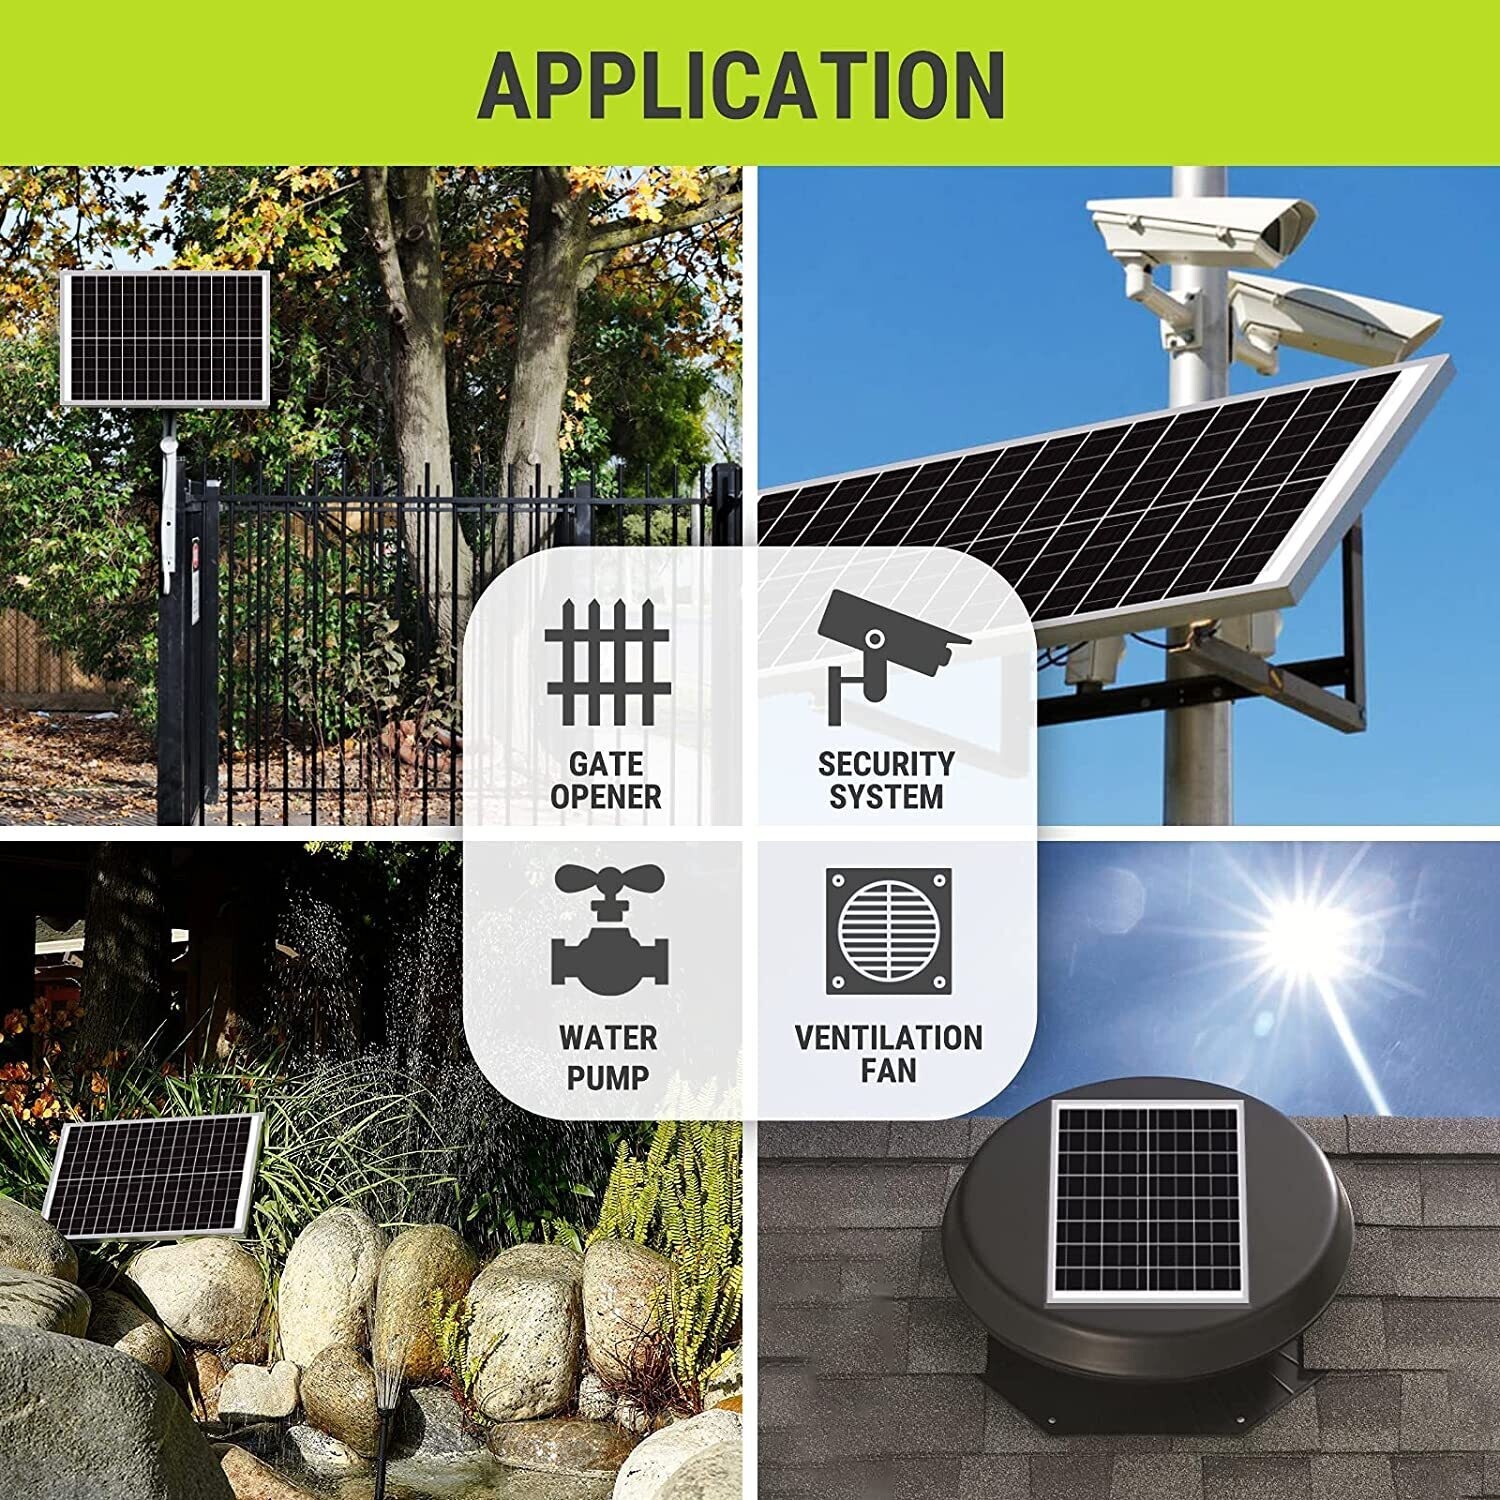 Edobo solar 120w solar panel grid-tied local solar panel installers for industrial